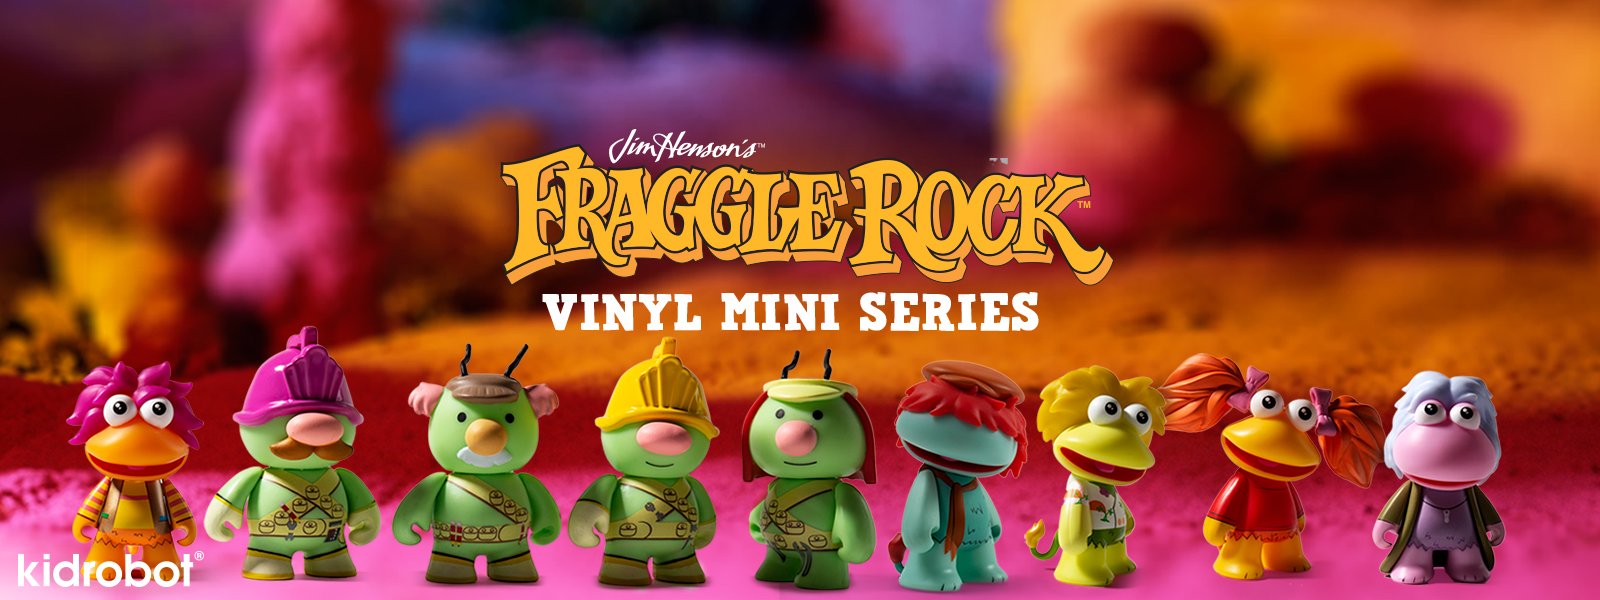 Fraggle Rock Vinyl Keychain Series KidRobot Milly 2/24